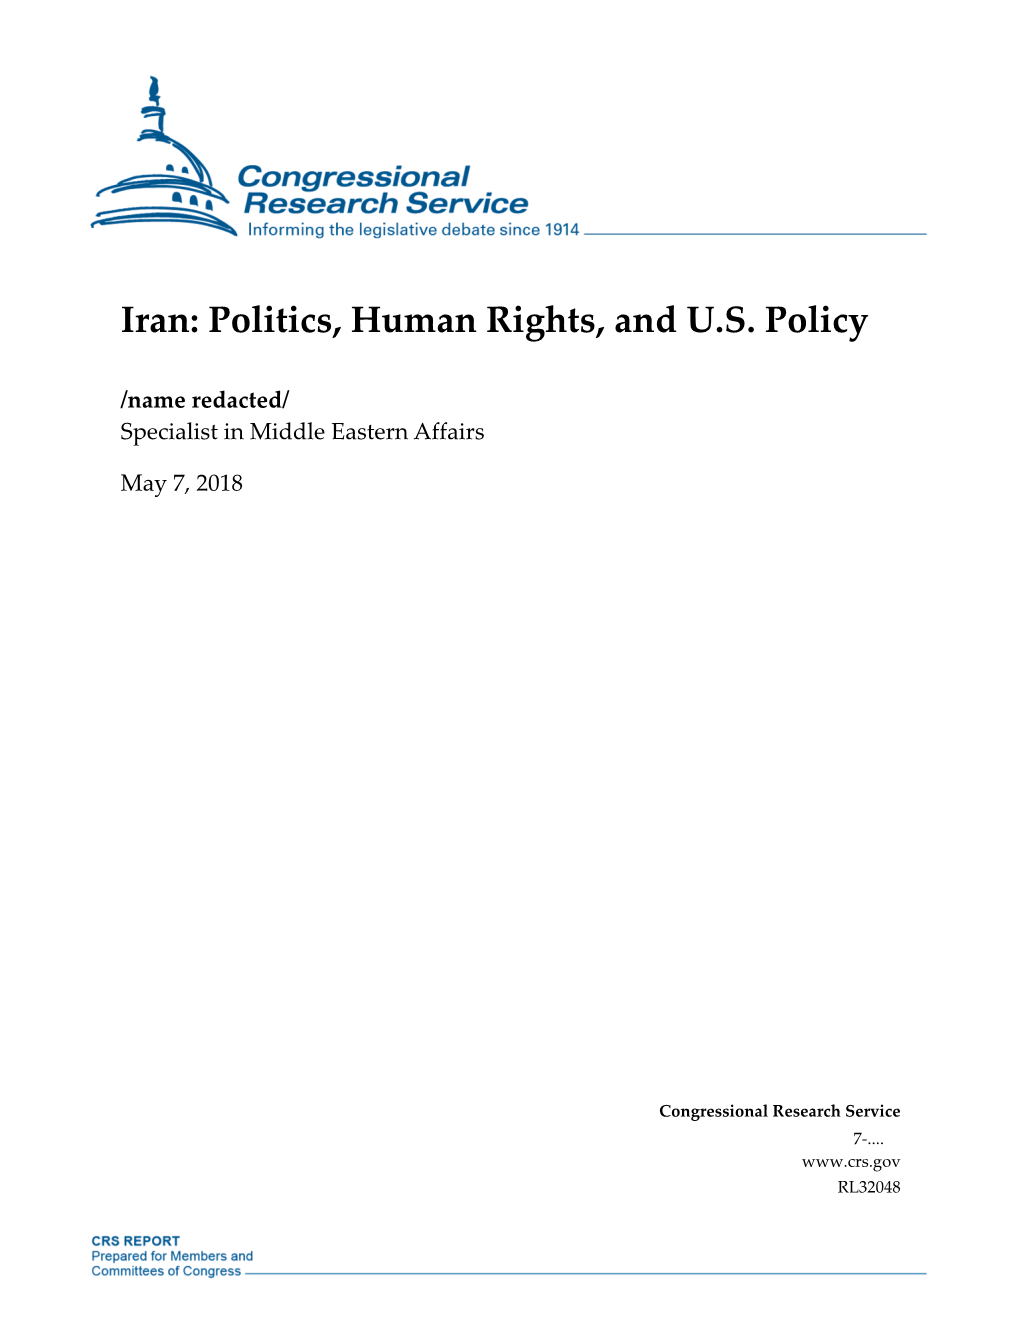 Iran: Politics, Human Rights, and US Policy